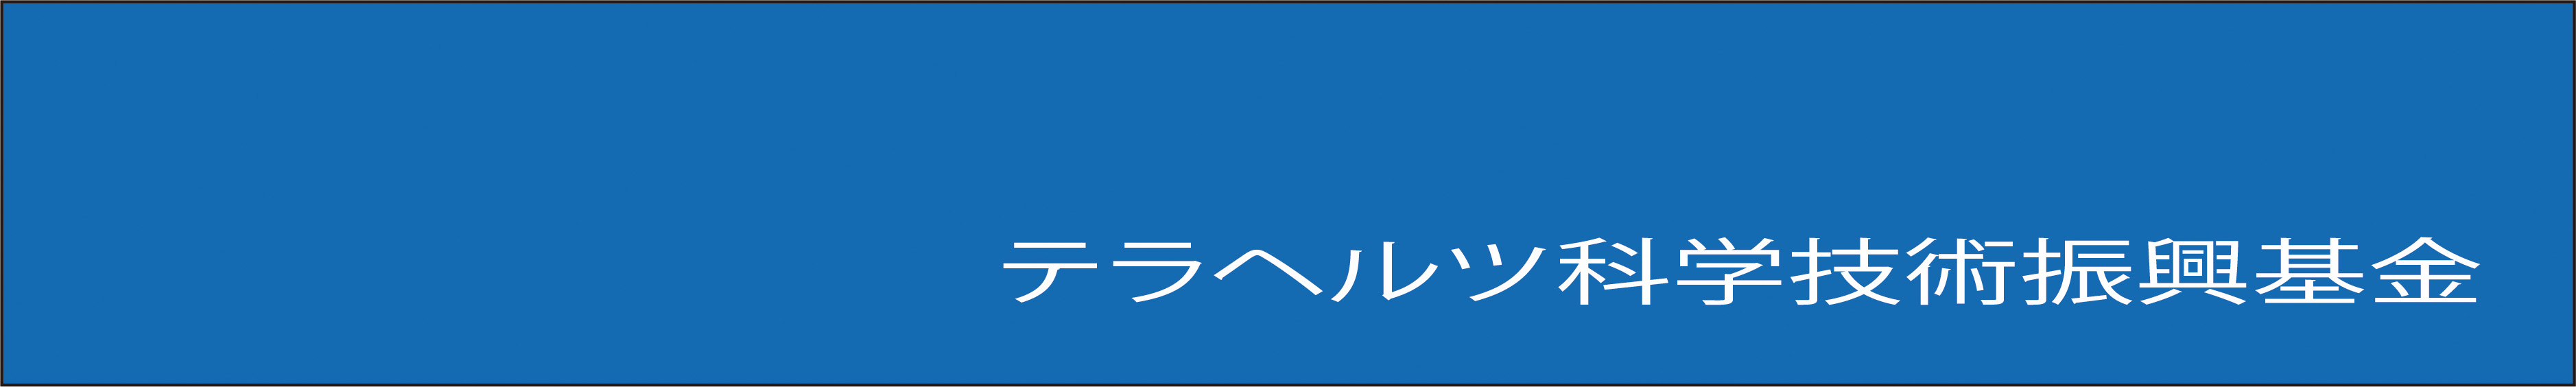 Terahertz_Japan